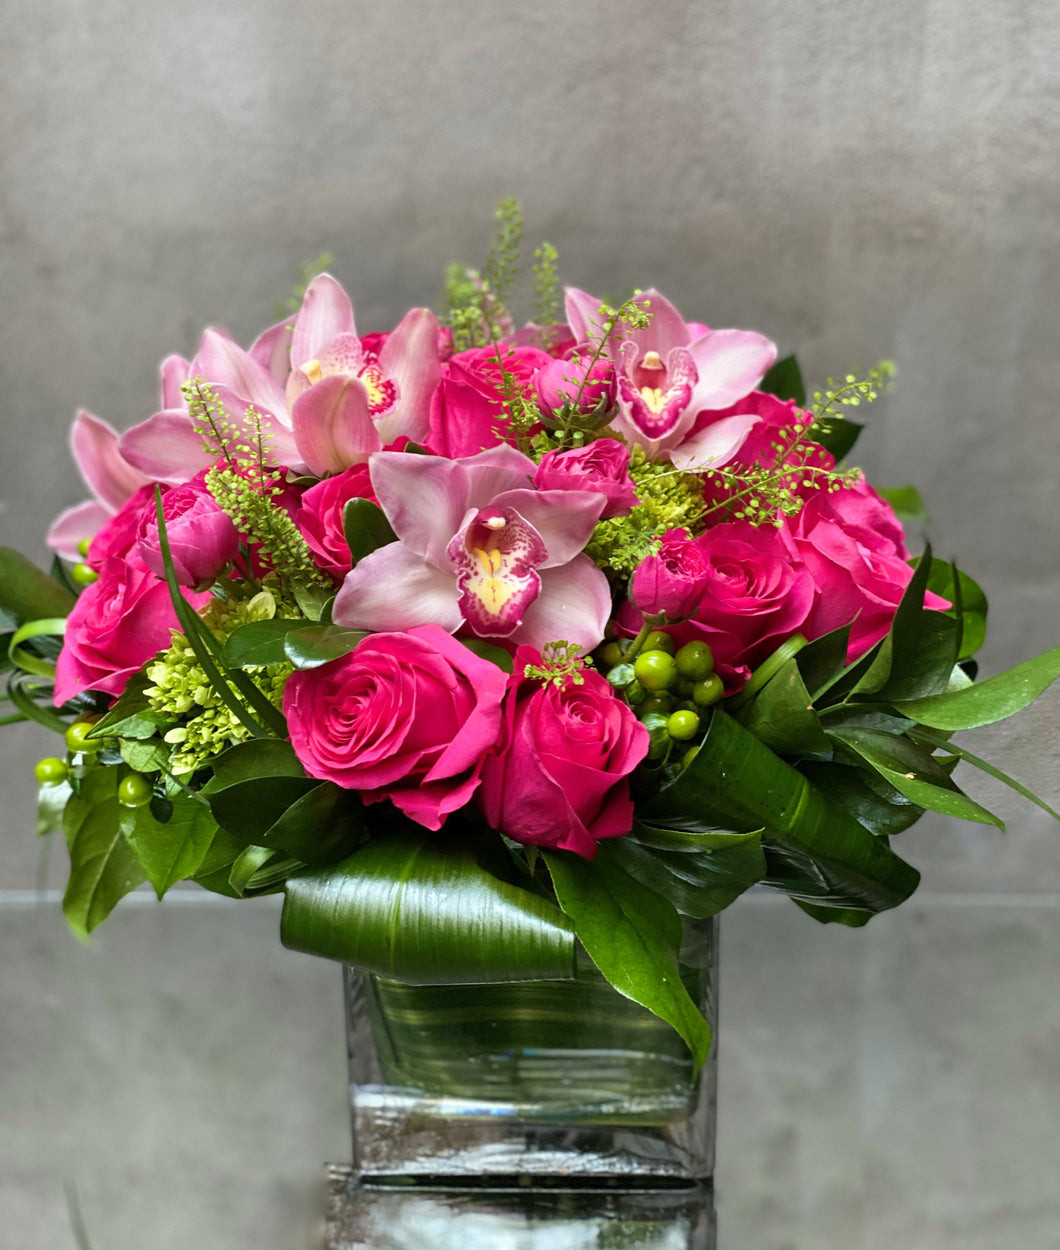 F202 - Modern Rose, Ranunculus and Cymbidium Arrangement (Cymbidium orchid colour based on availability - white, light pink or dark pink)